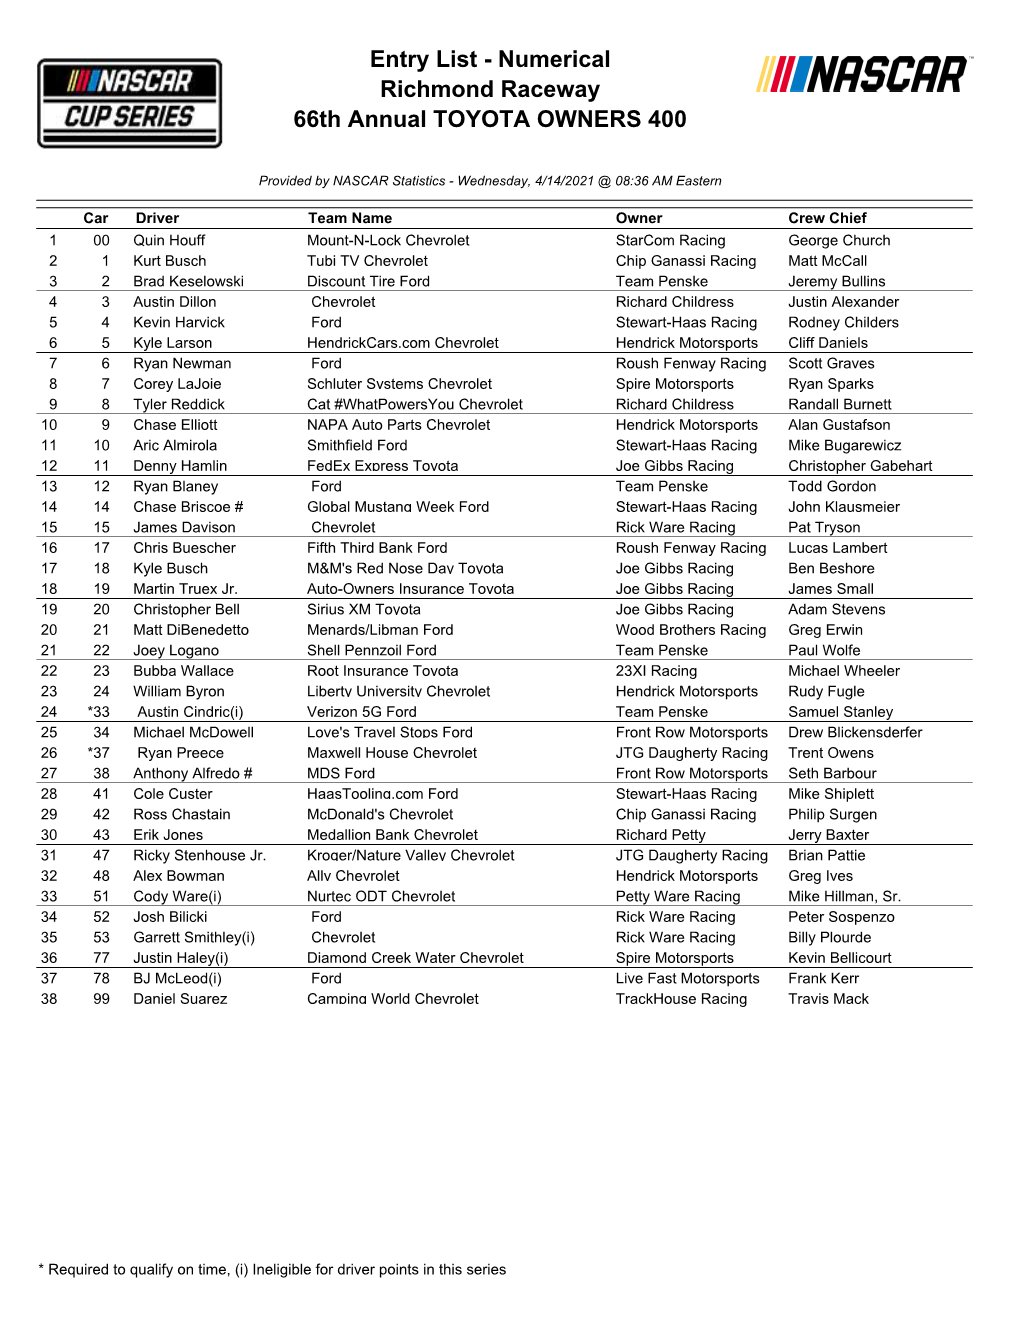 Entry List - Numerical Richmond Raceway 66Th Annual TOYOTA OWNERS 400